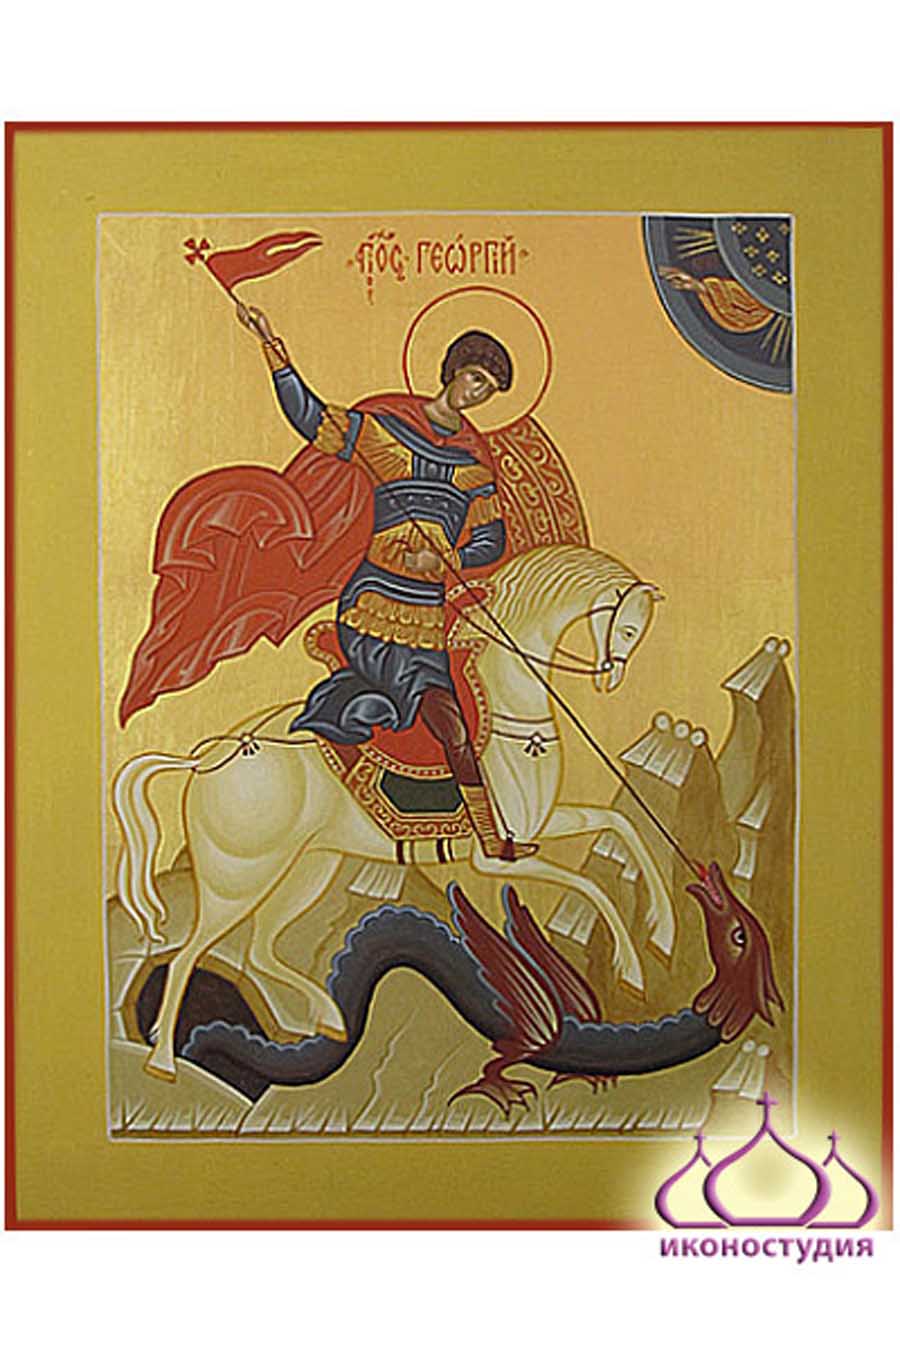 Икона великомученика Георгия Победоносца